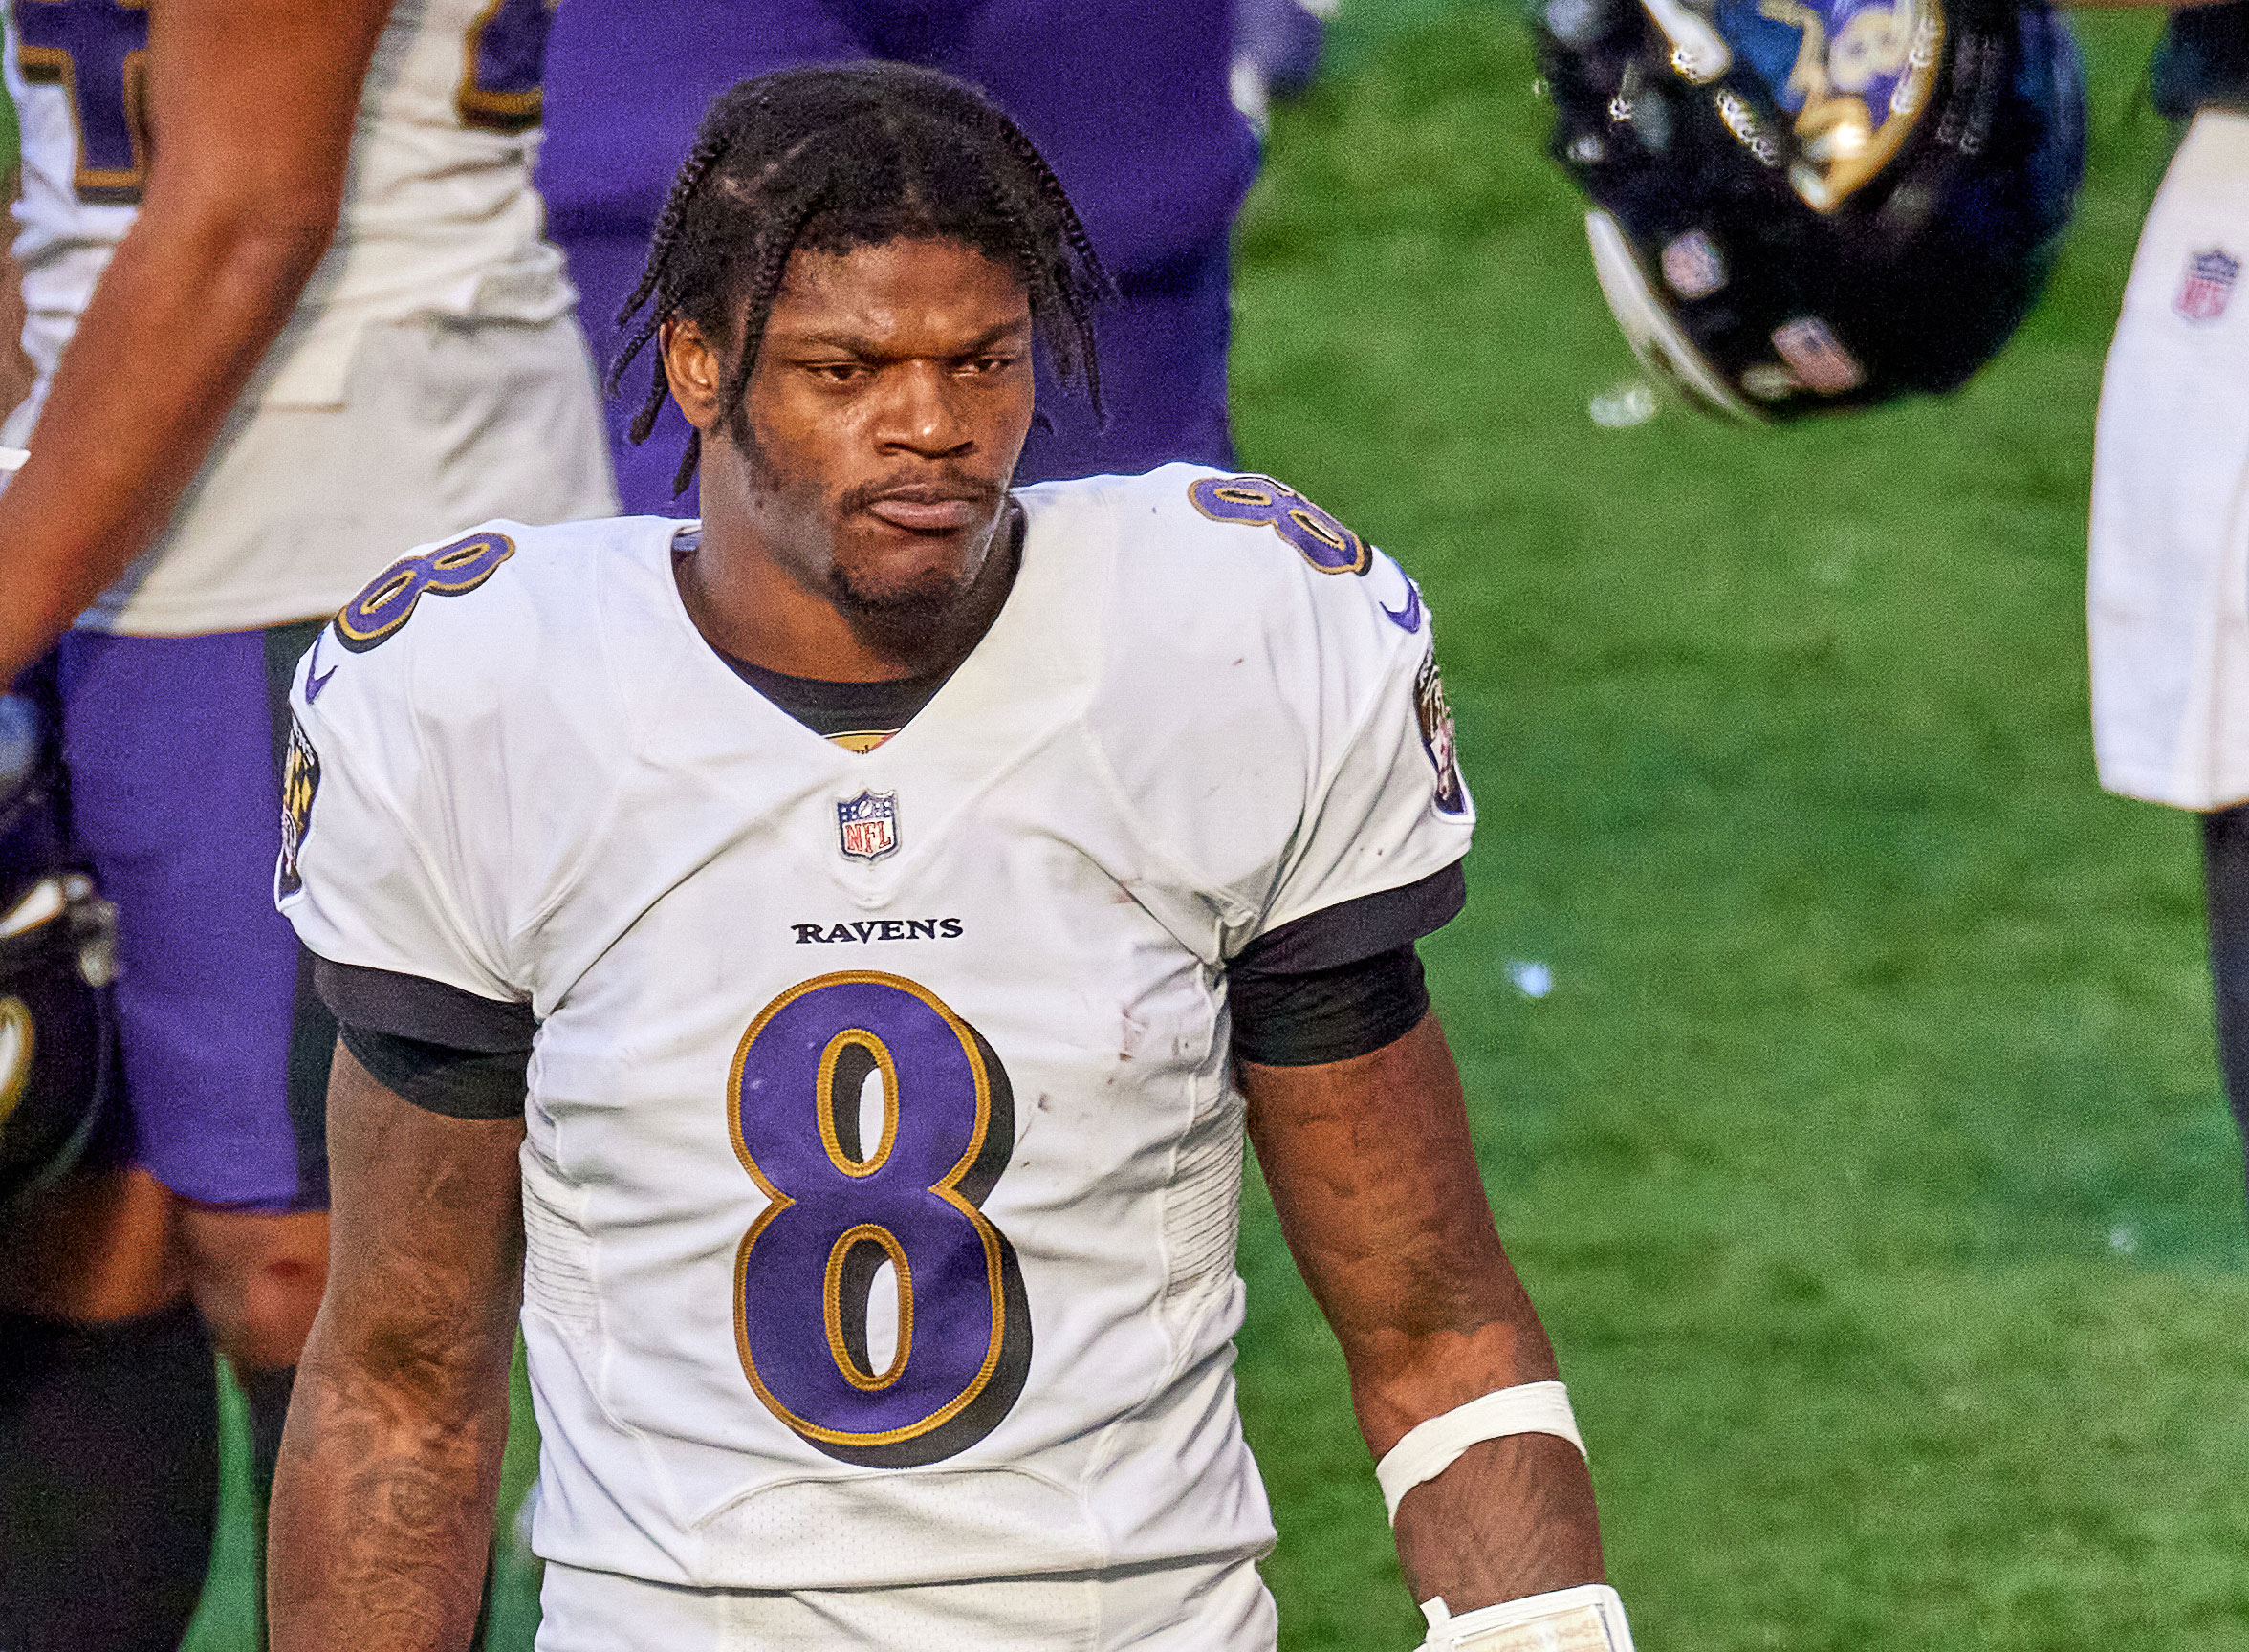 Baltimore Ravens quarterback Lamar Jackson looks on during a game in Indianapolis on November 8, 2020.